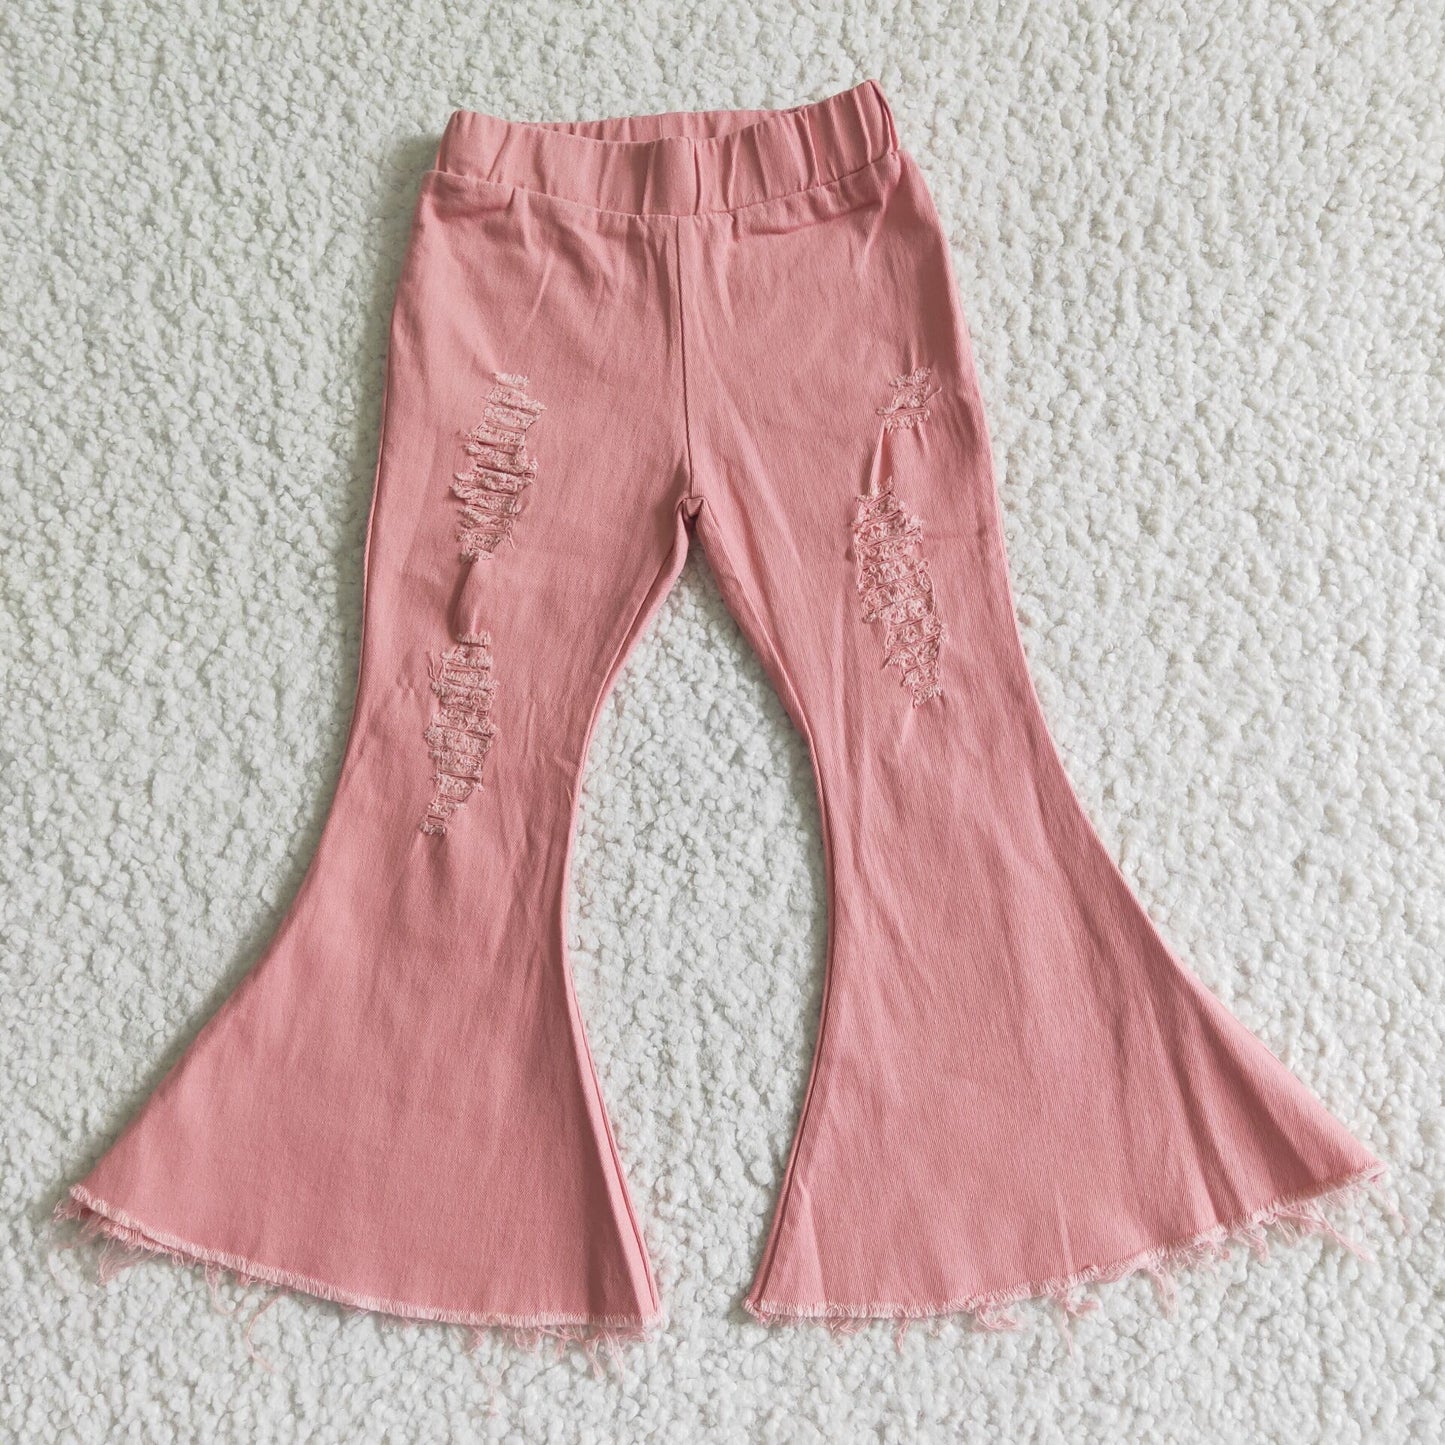 baby girl's clothing pink denim pants